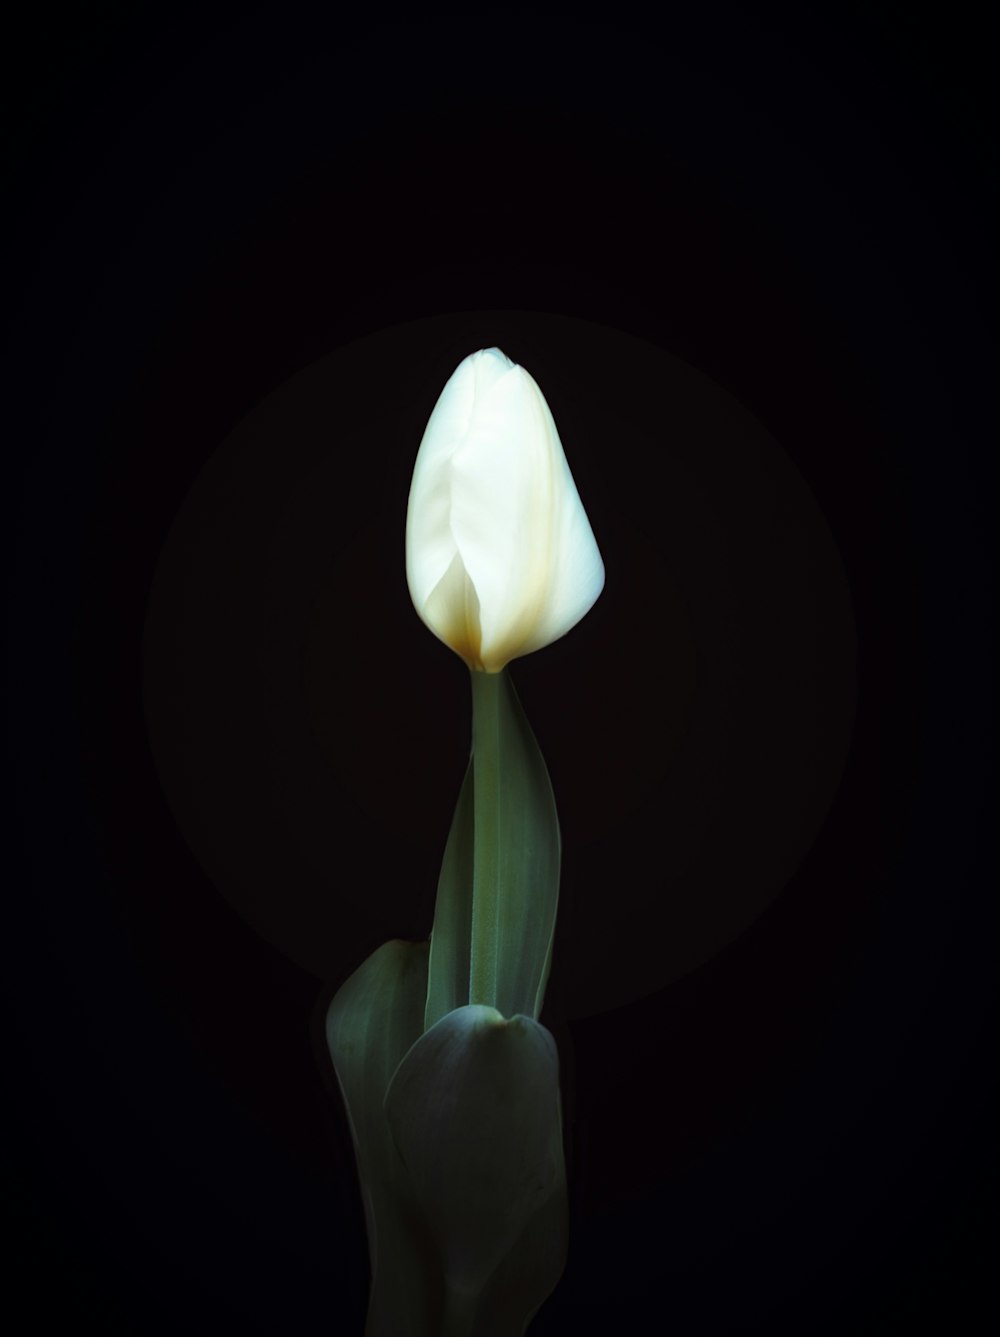 a single white flower in a dark room